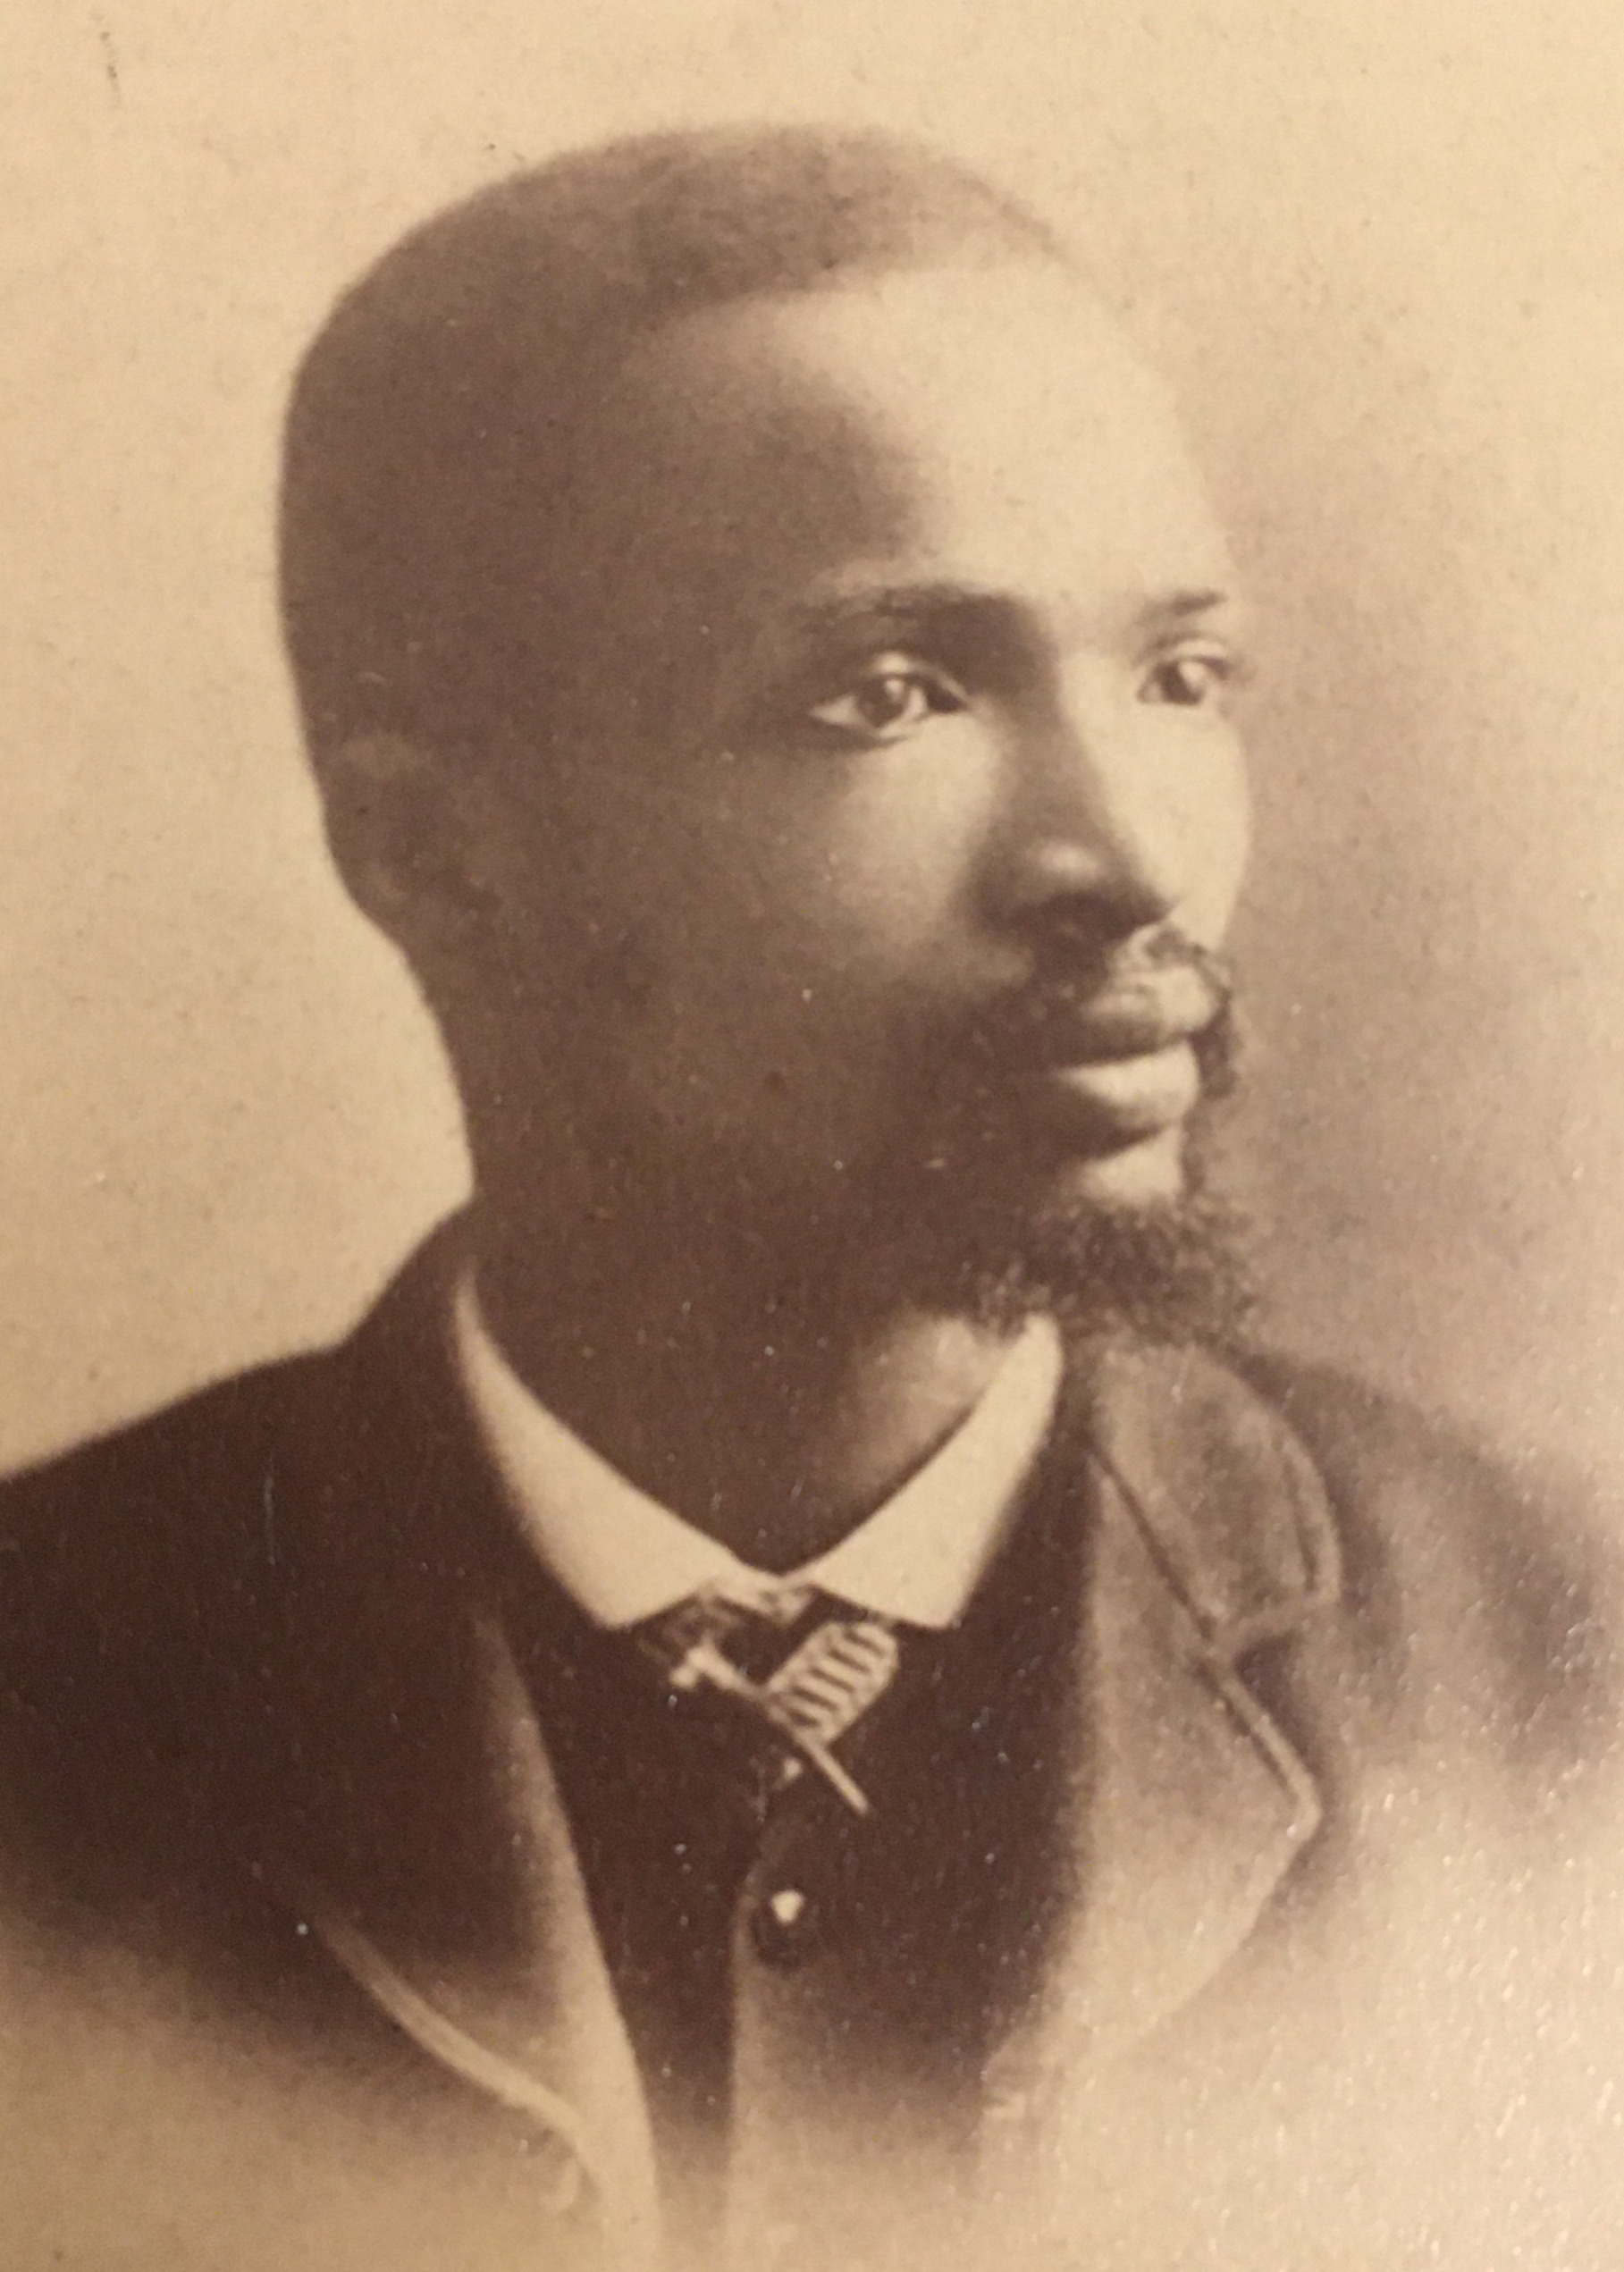 1887 portrait photograph of John Mavuma Nembula in sepia tones. Nembula has short hair, a goatee, and wears a suit and tie.